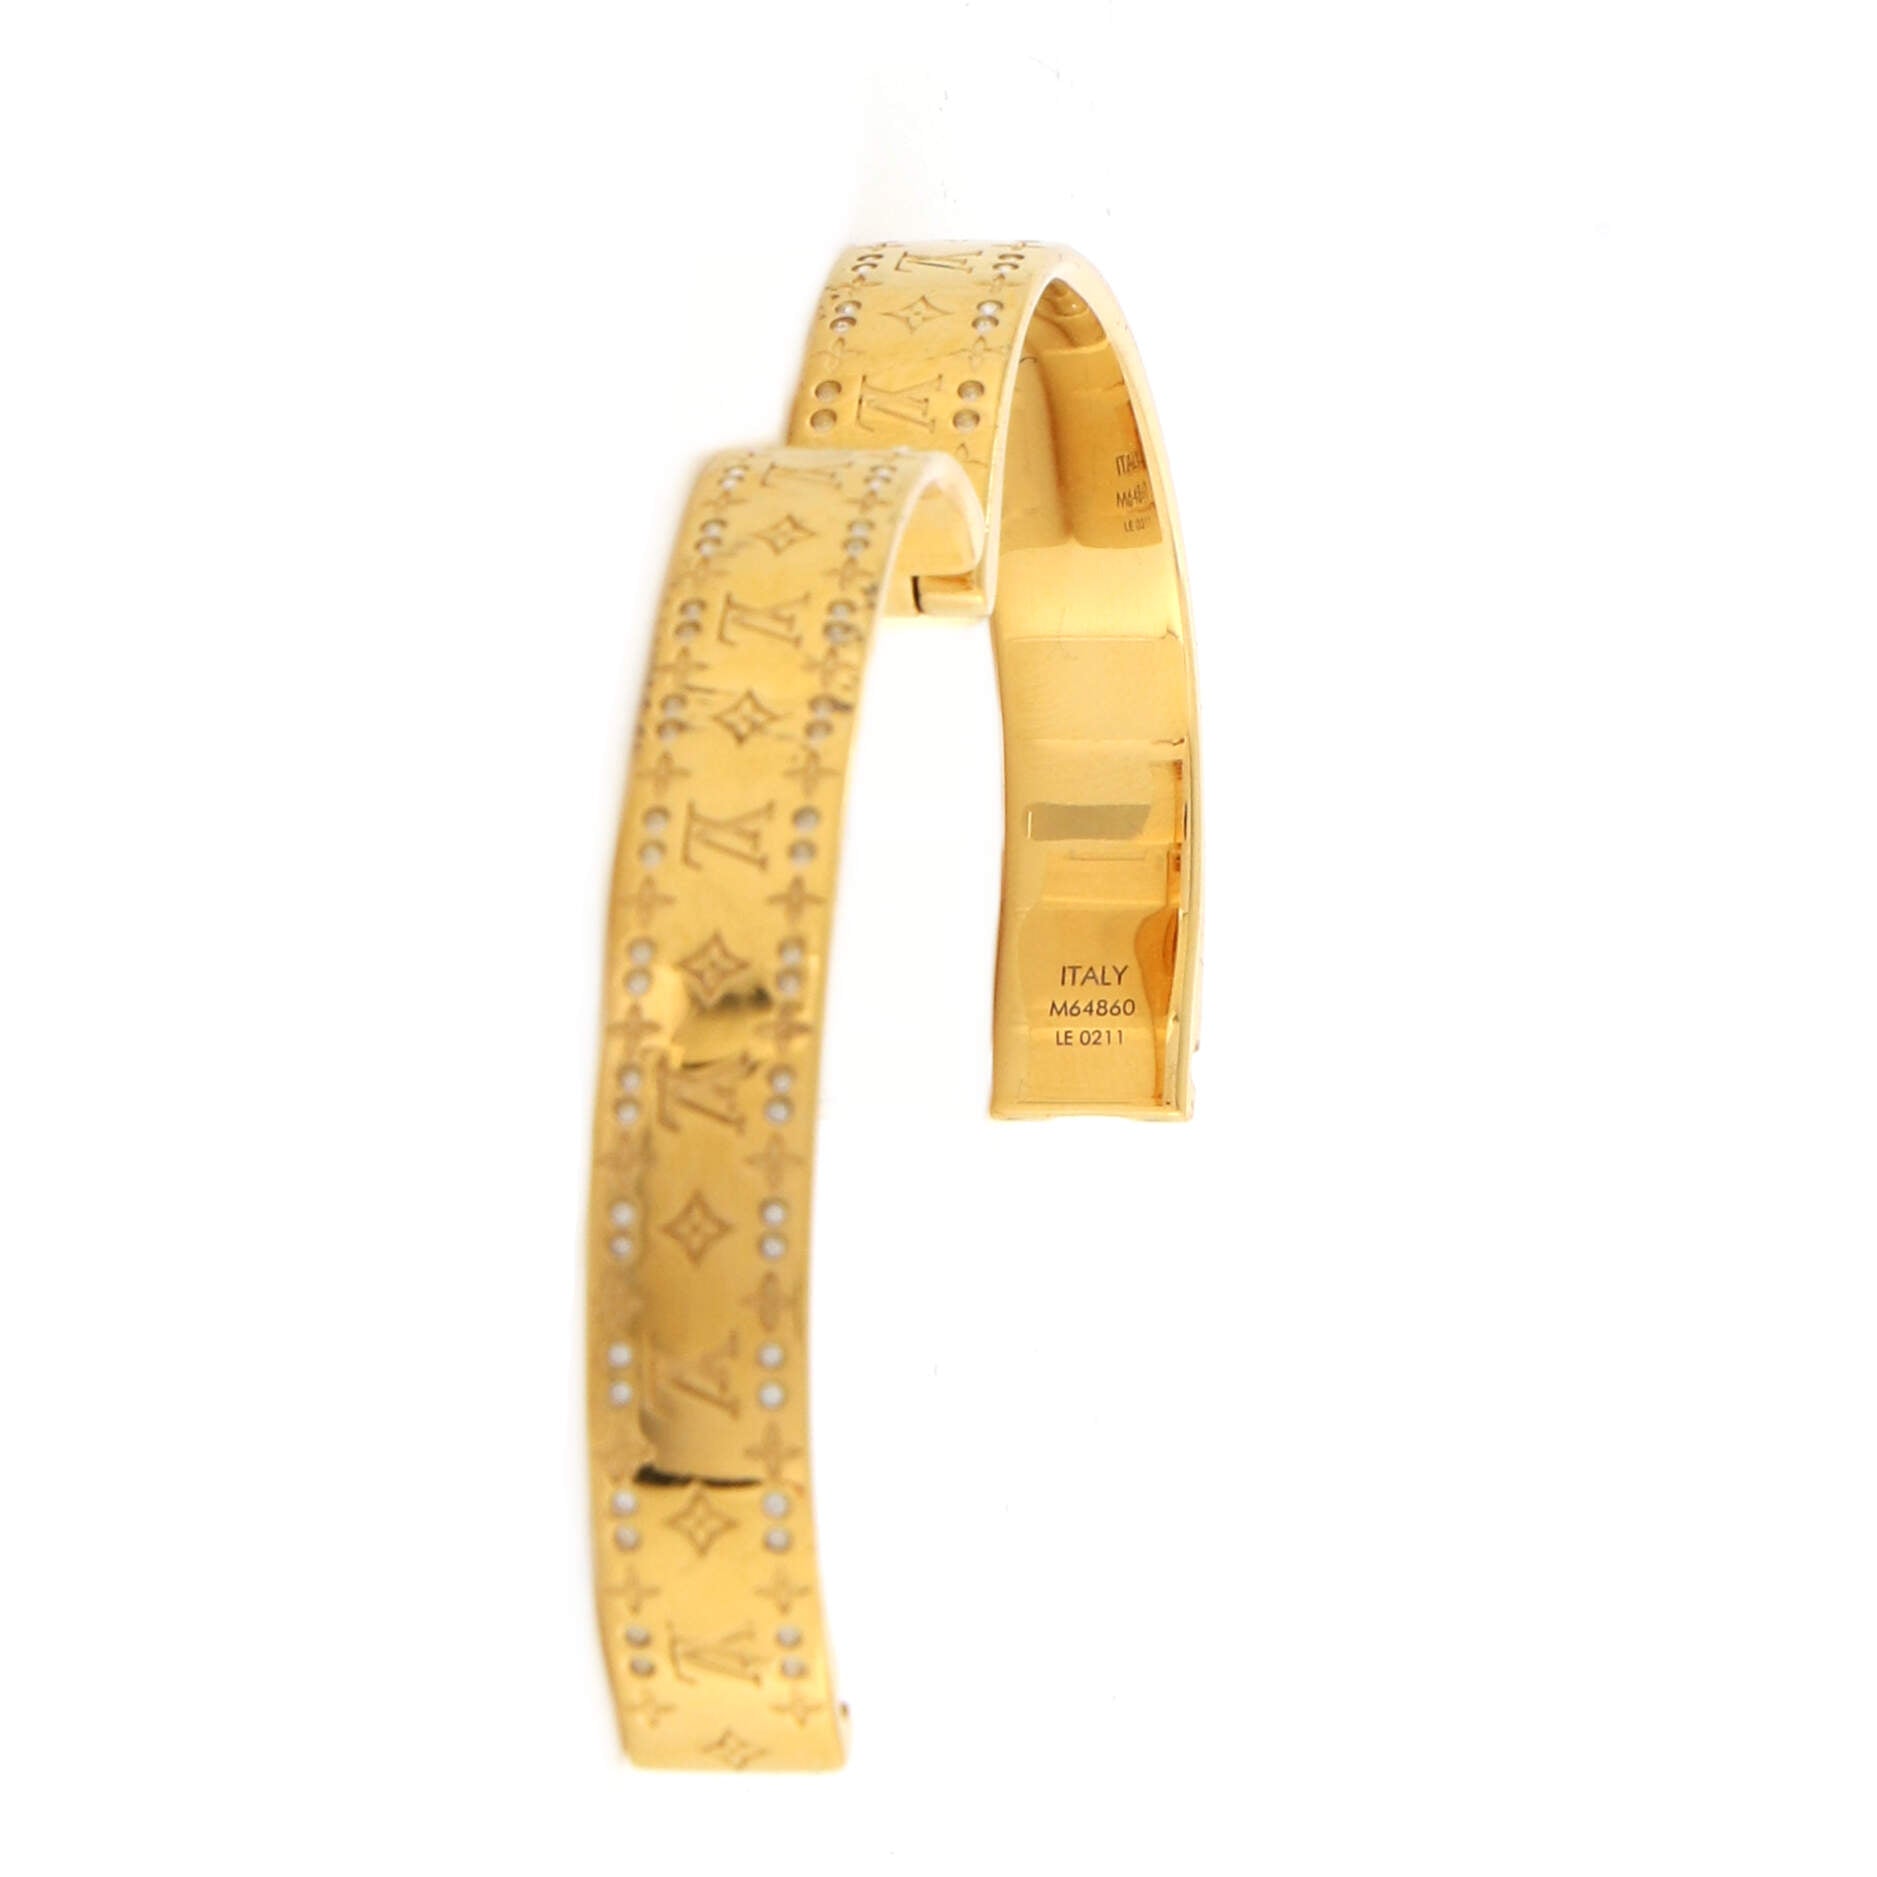 Shop Louis Vuitton Nanogram strass bracelet (M64860) by